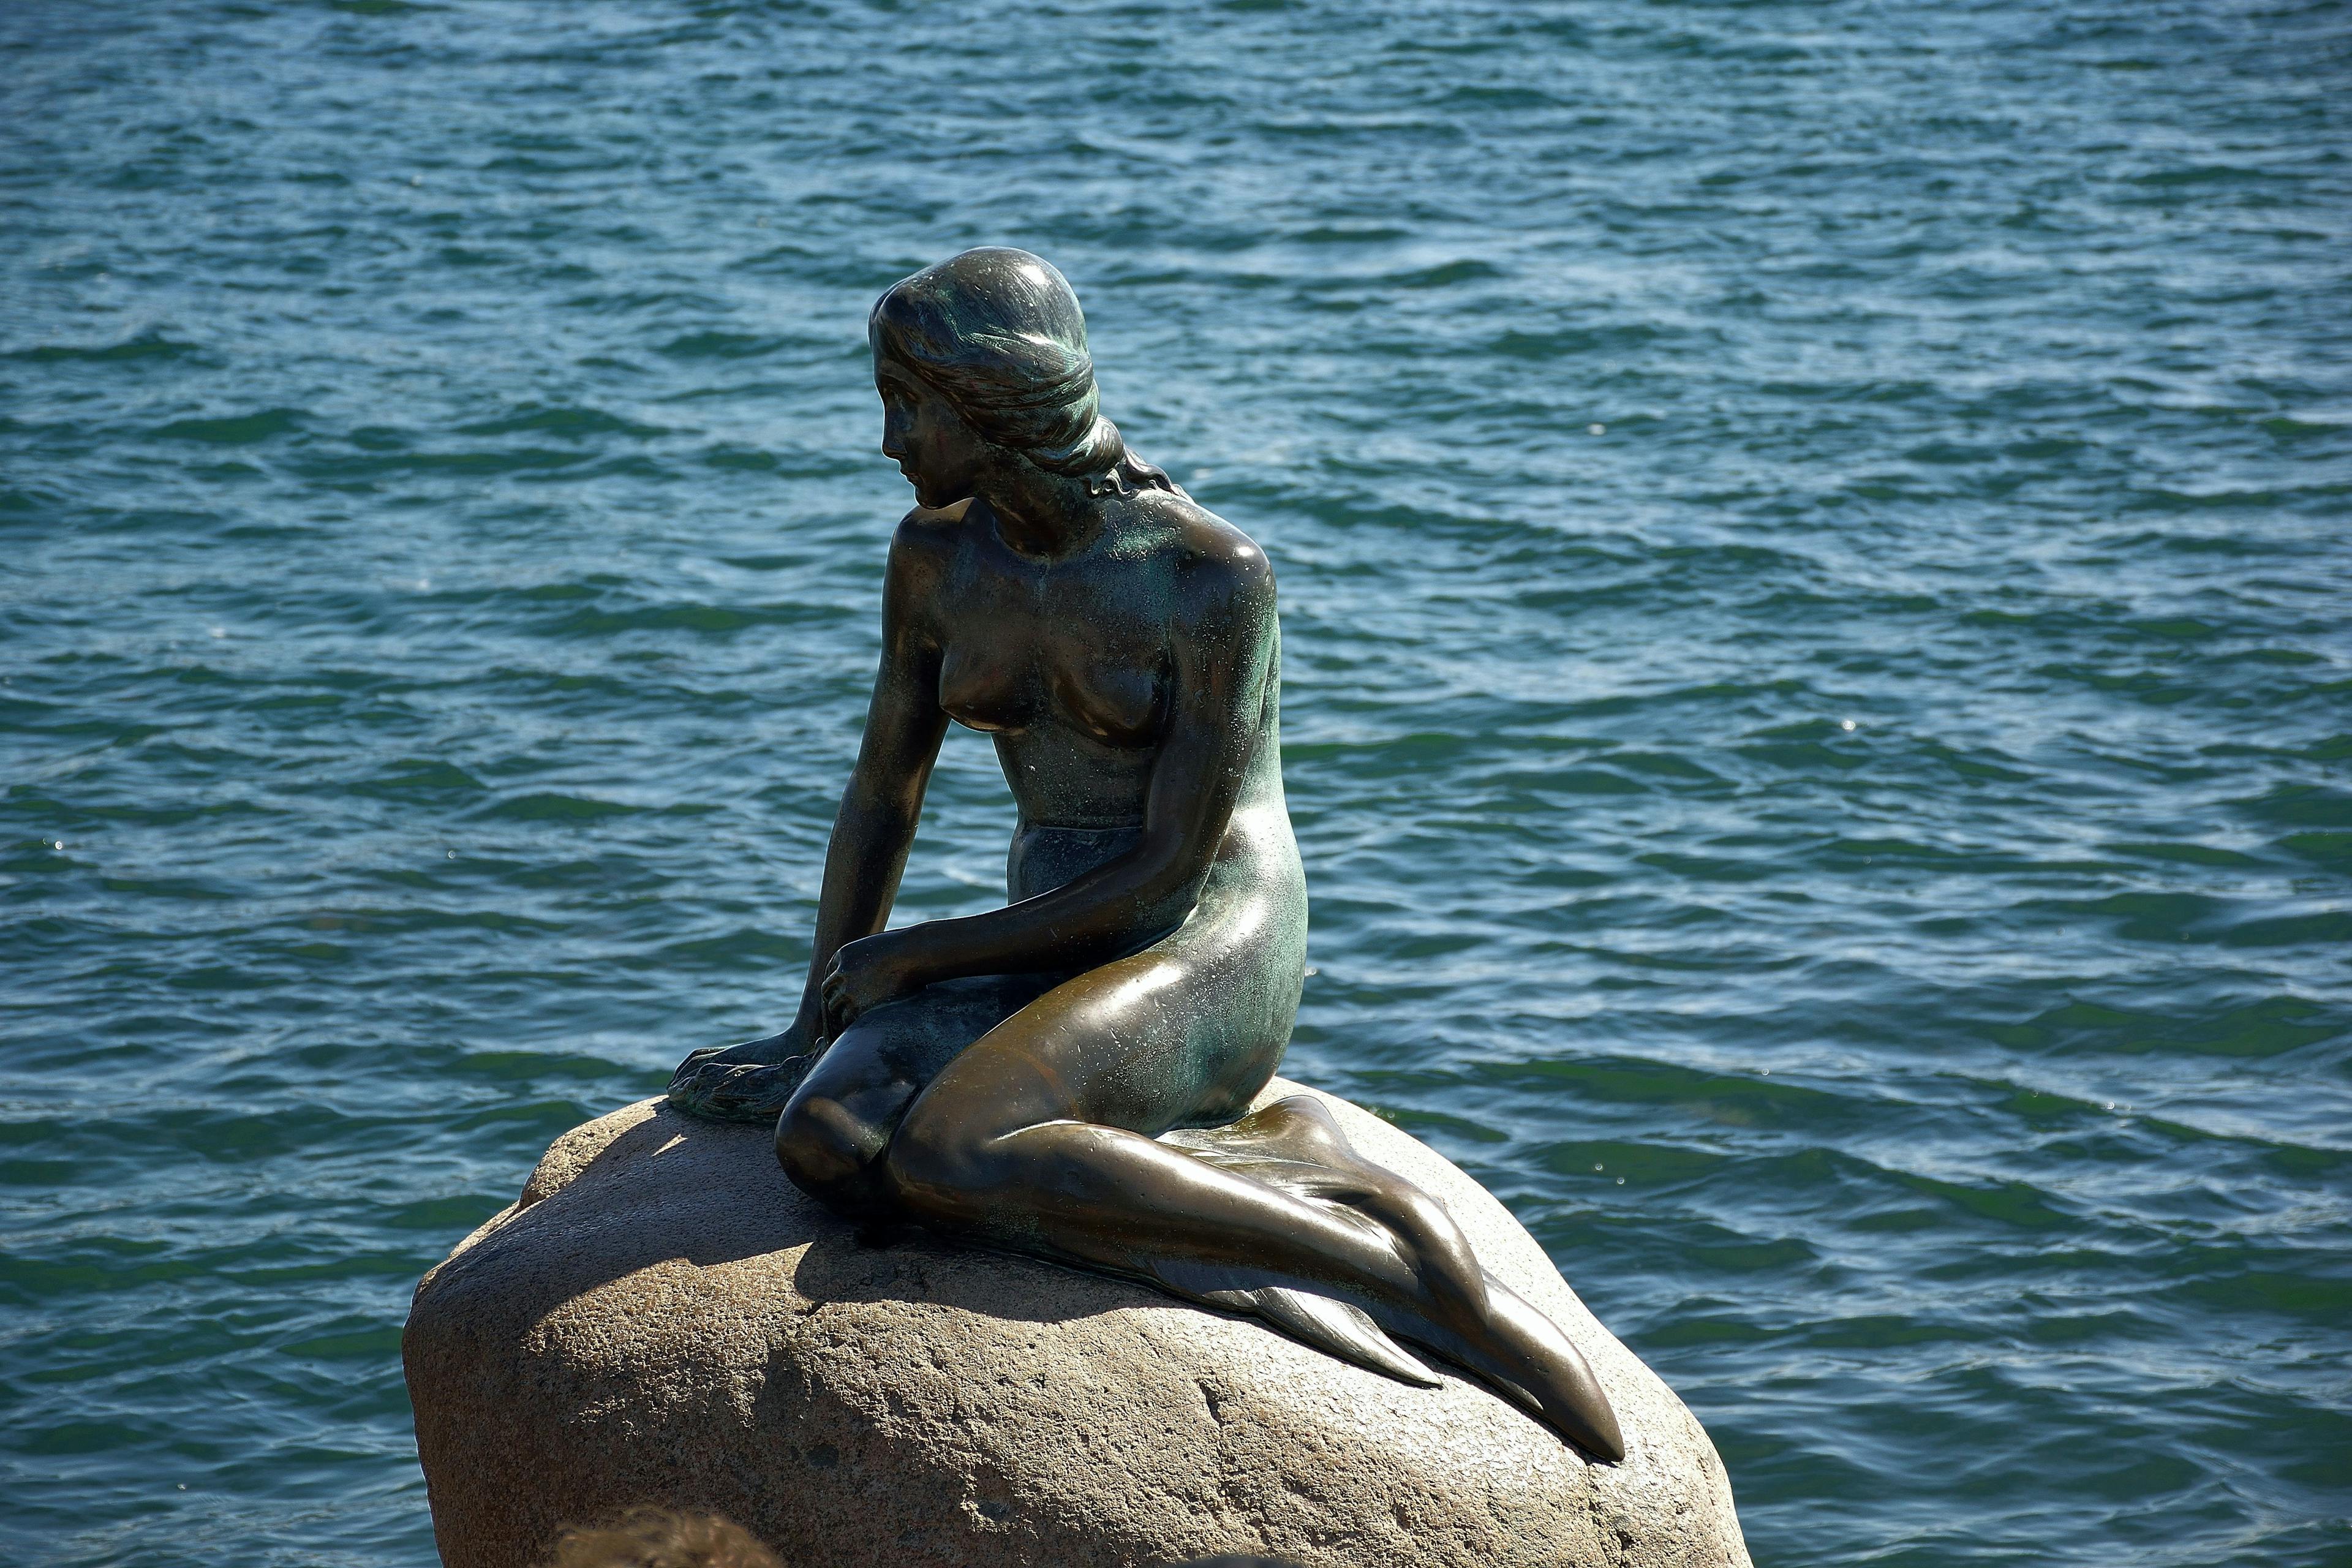 Little Mermaid statue in Copenhagen Denmark.